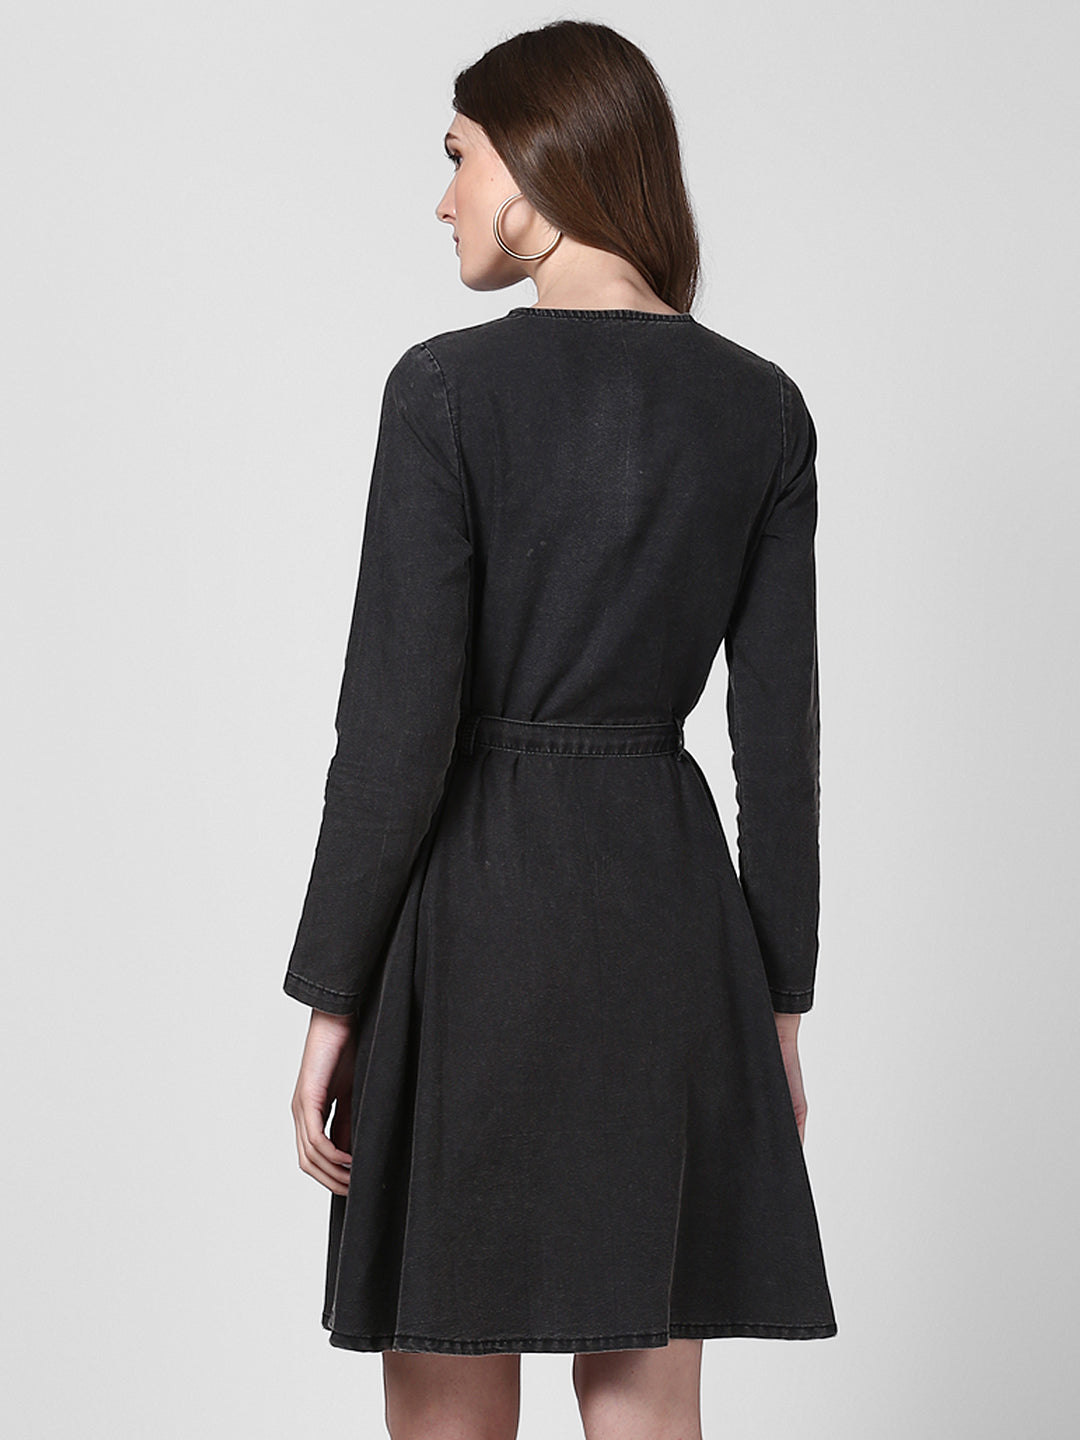 Women's Black Denim Dress with Shoulder Placket detail